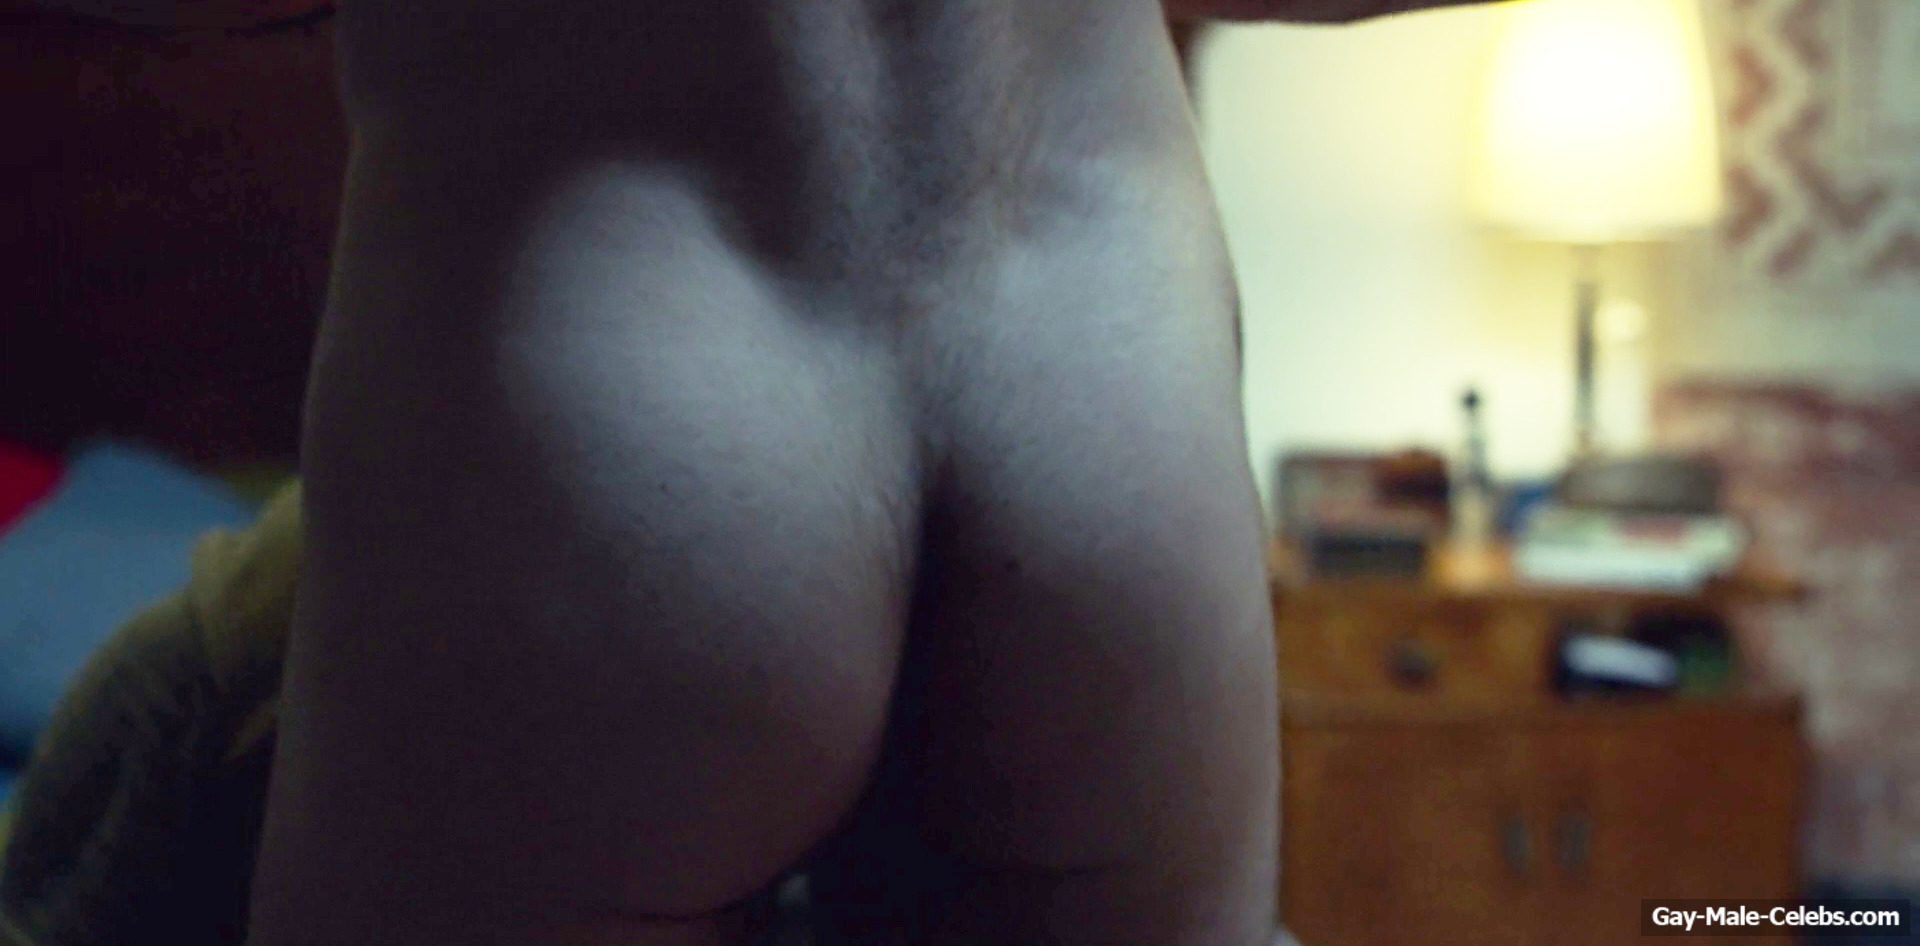 David Solans Nude And Gay Sex Photos &amp; Videos